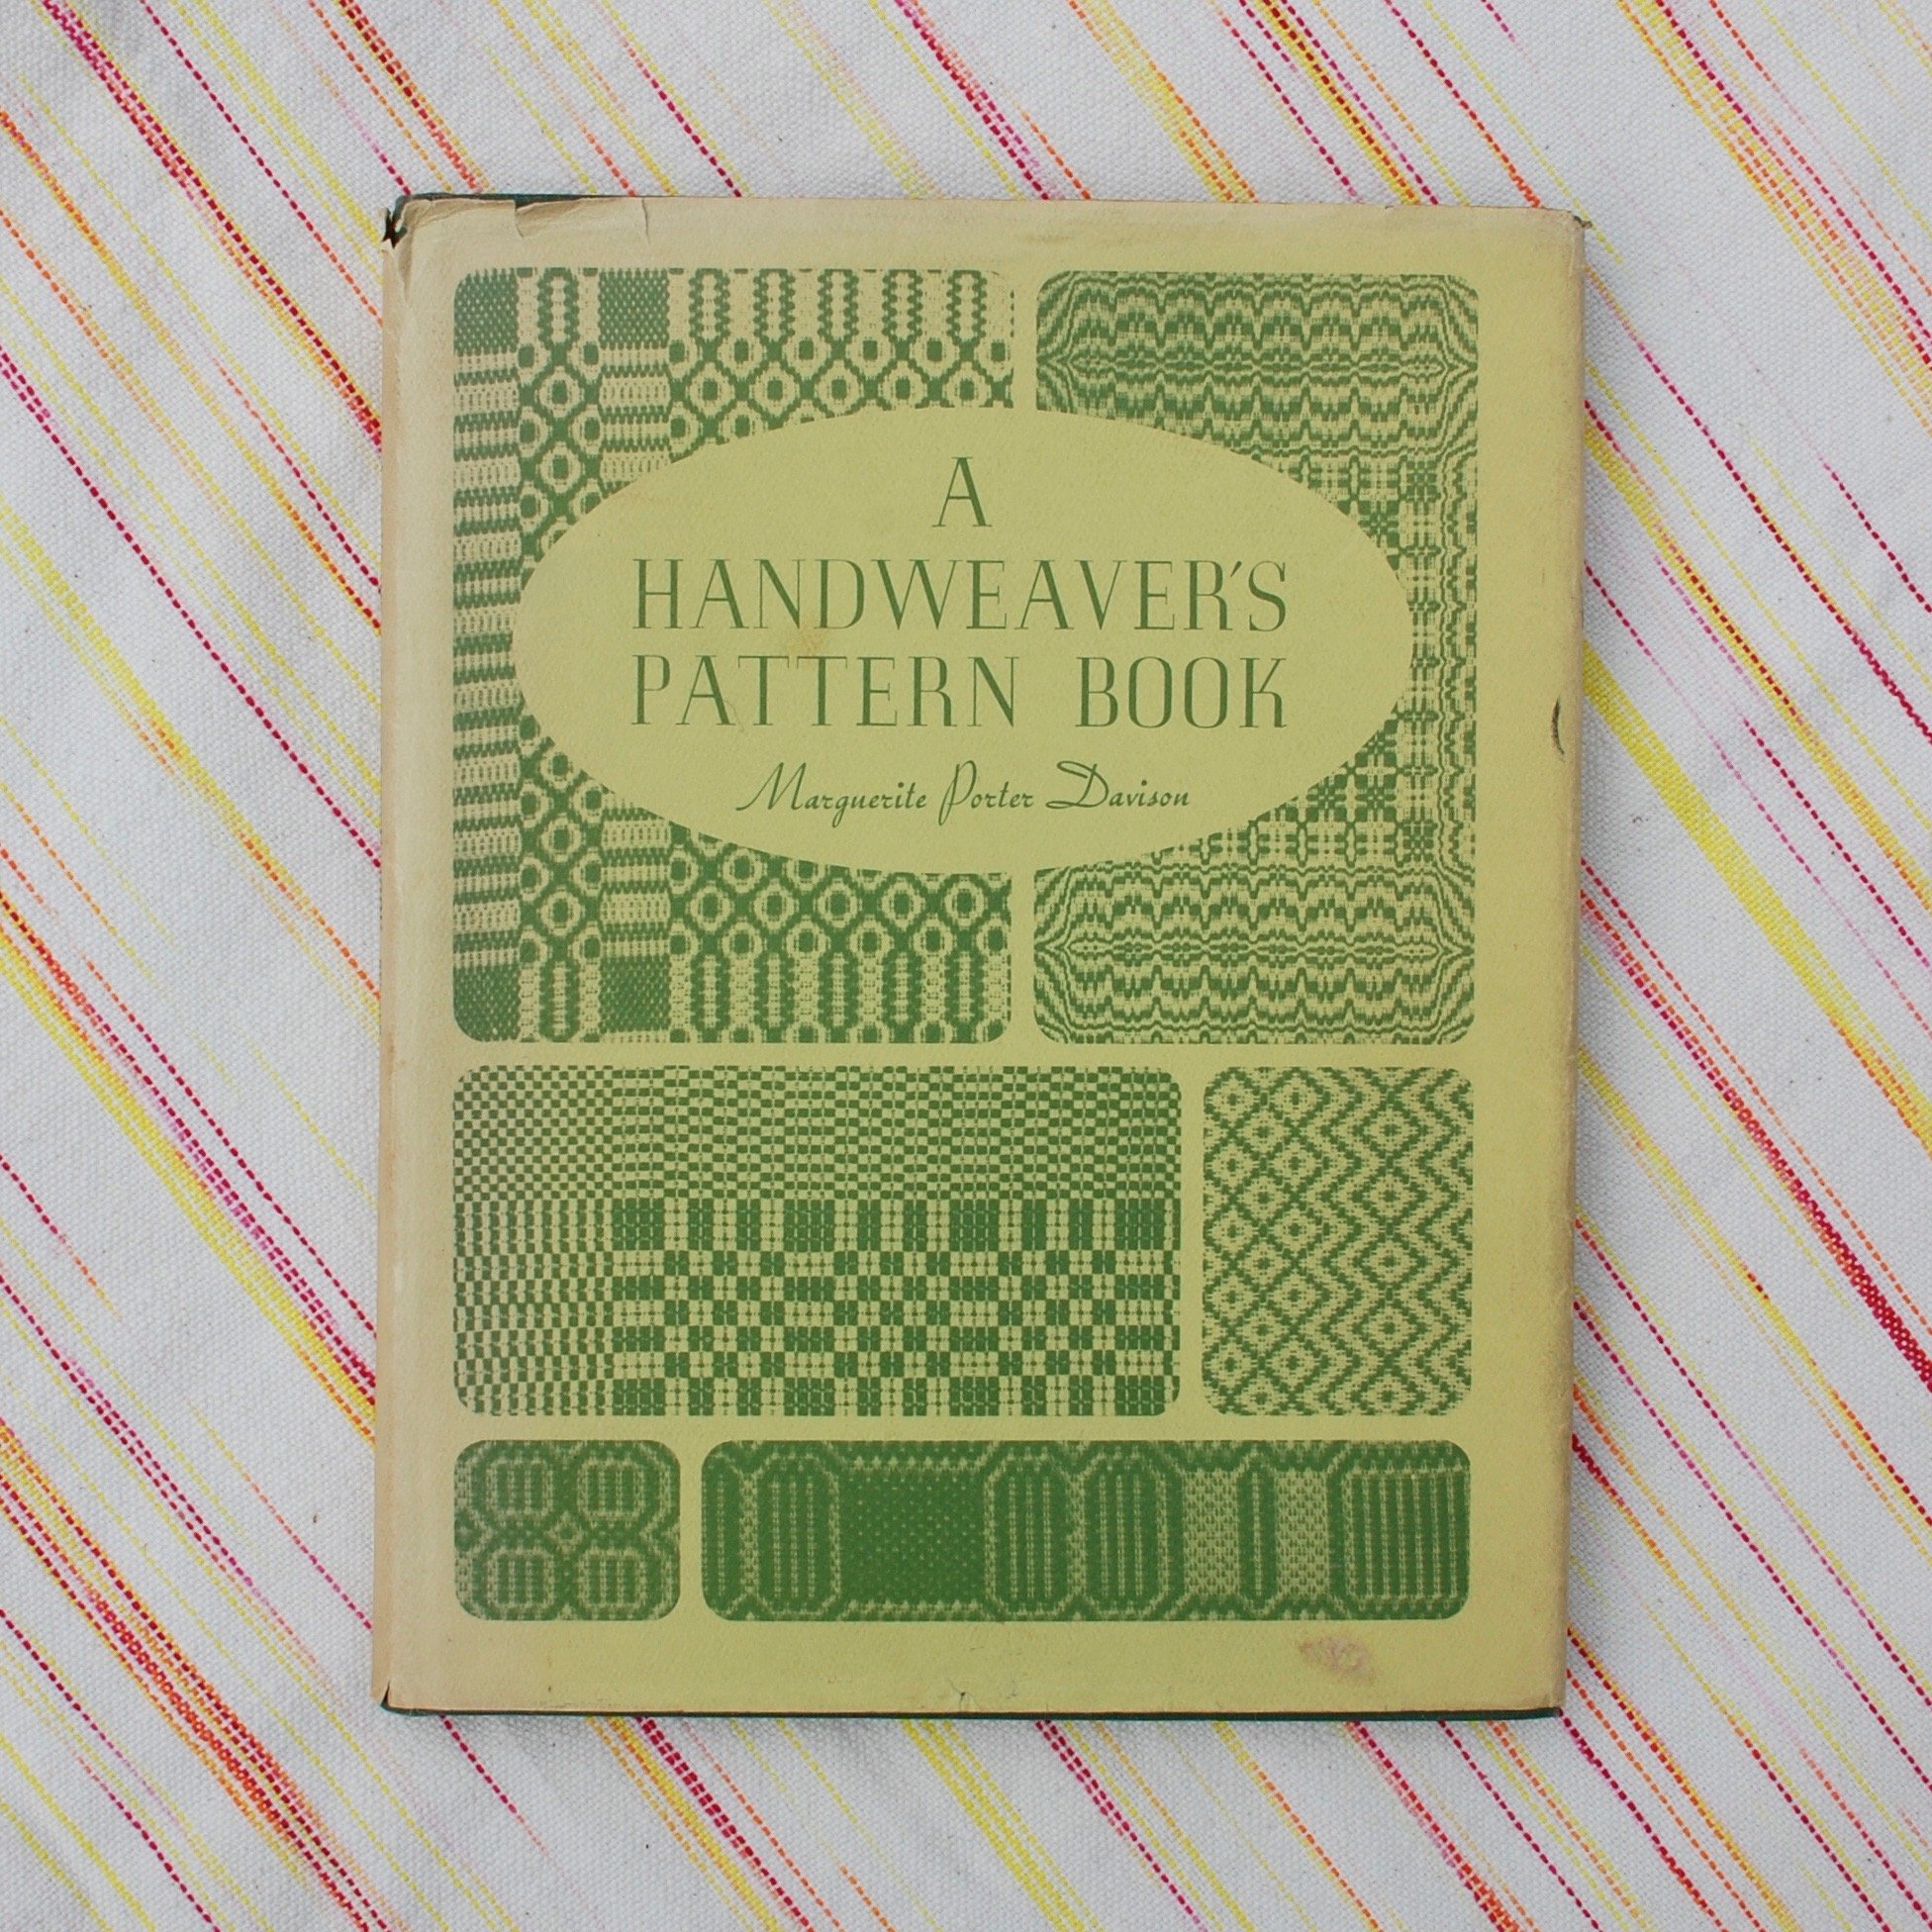 A Handweaver's Pattern Book, By Marguerite P. Davison — Heddle 